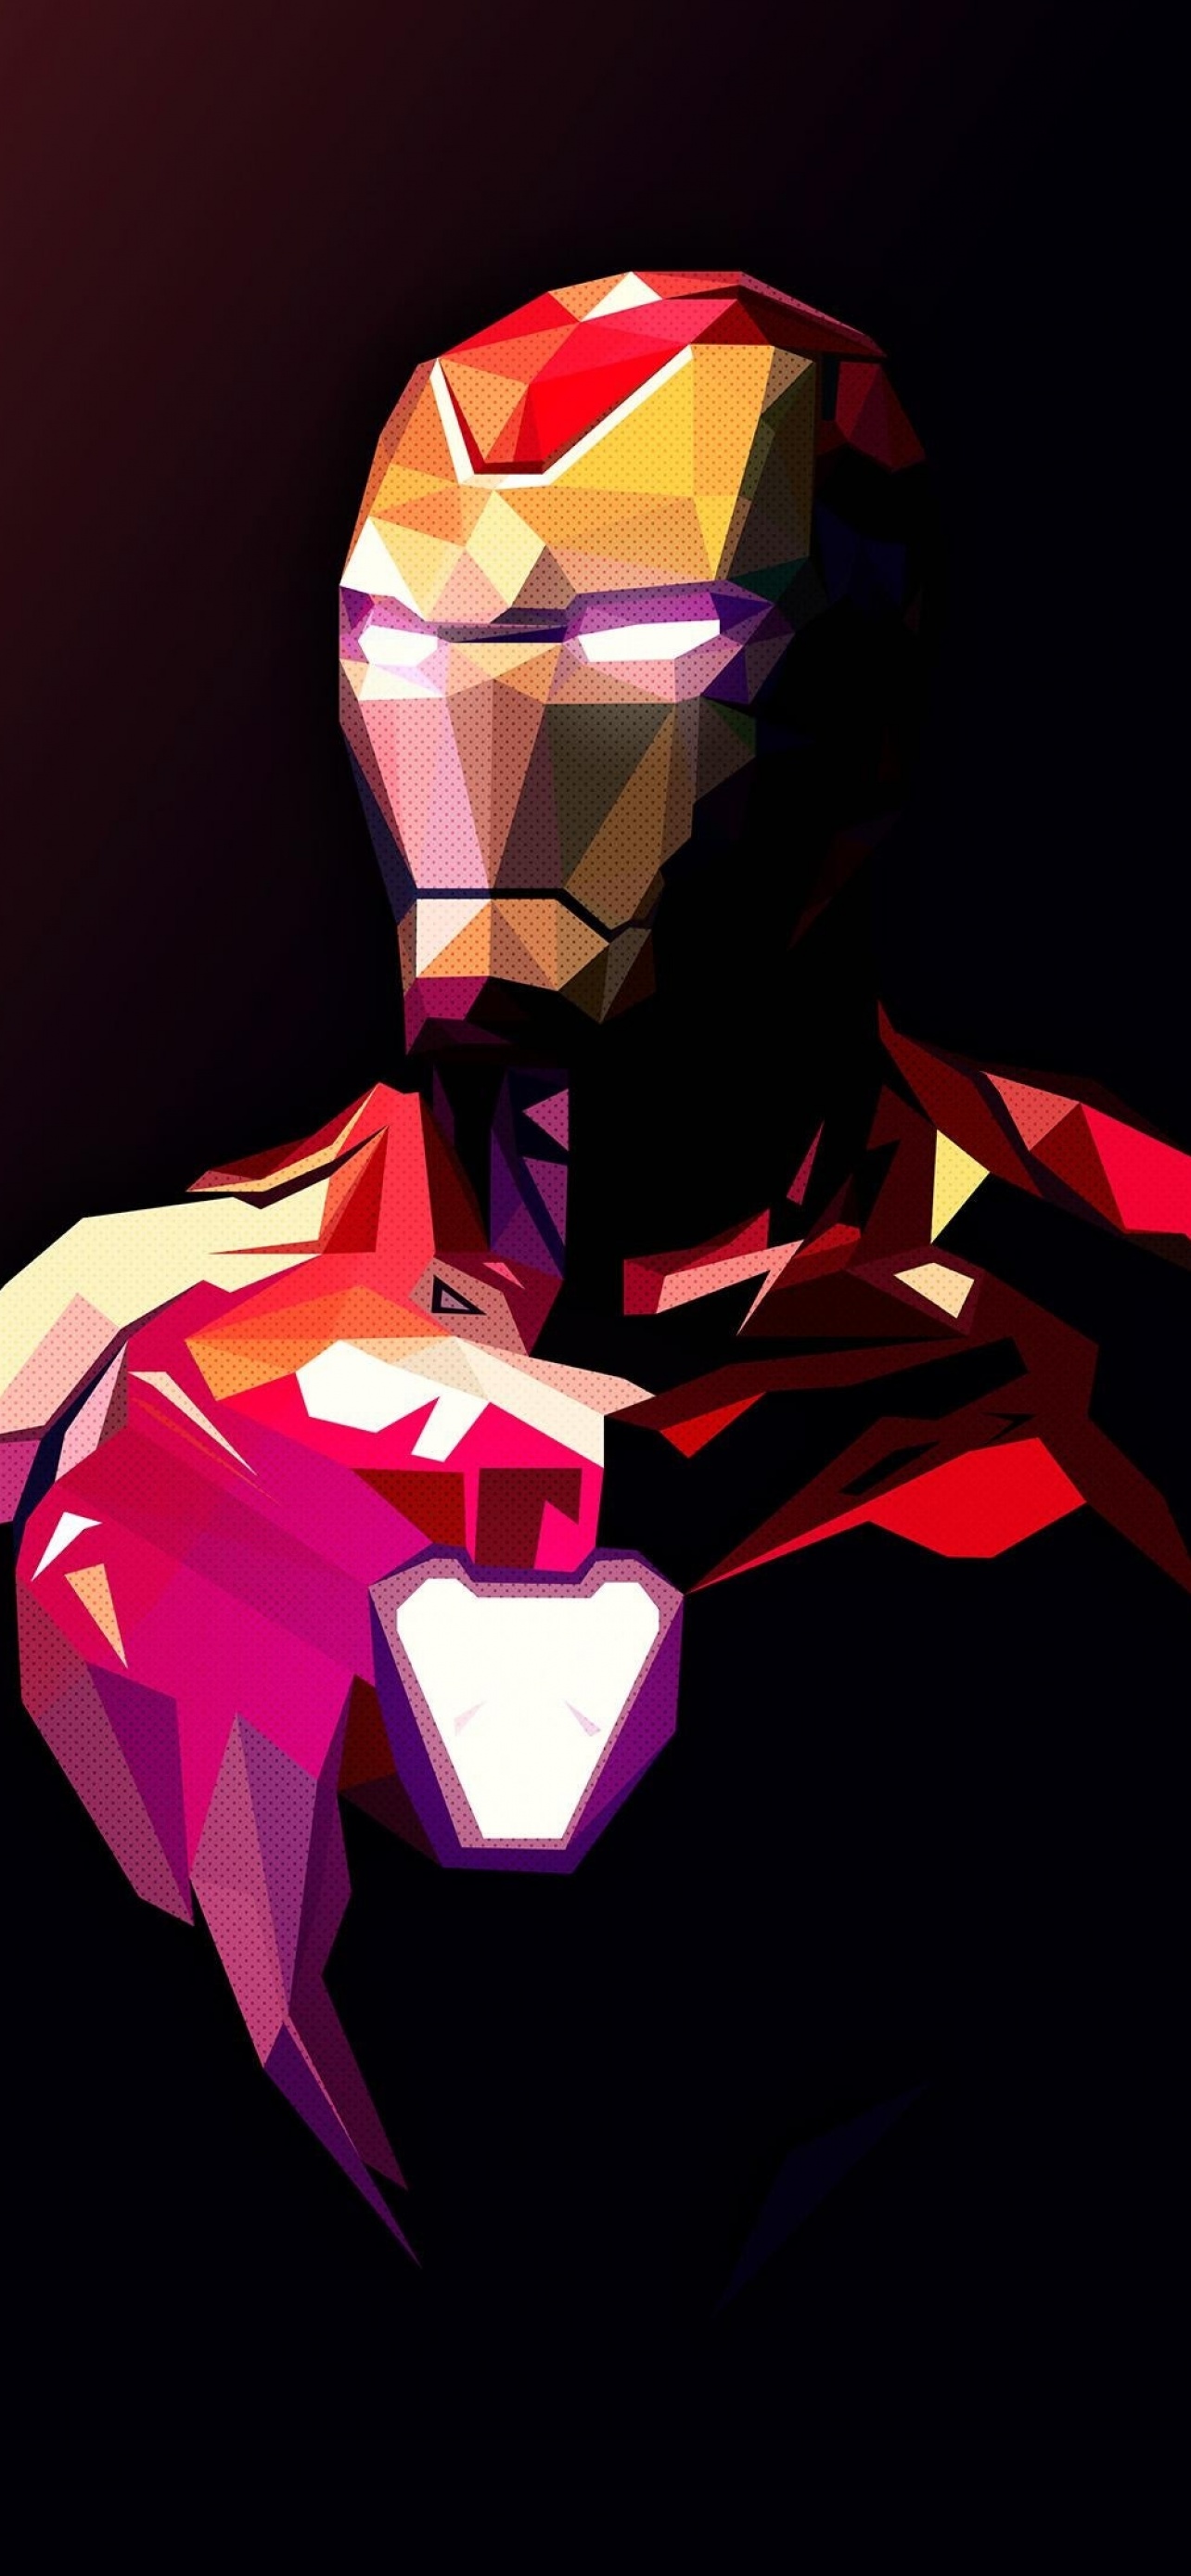 Iron Man Wallpaper 4K, Minimal art, Polygonal, Marvel Superheroes, Graphics CGI